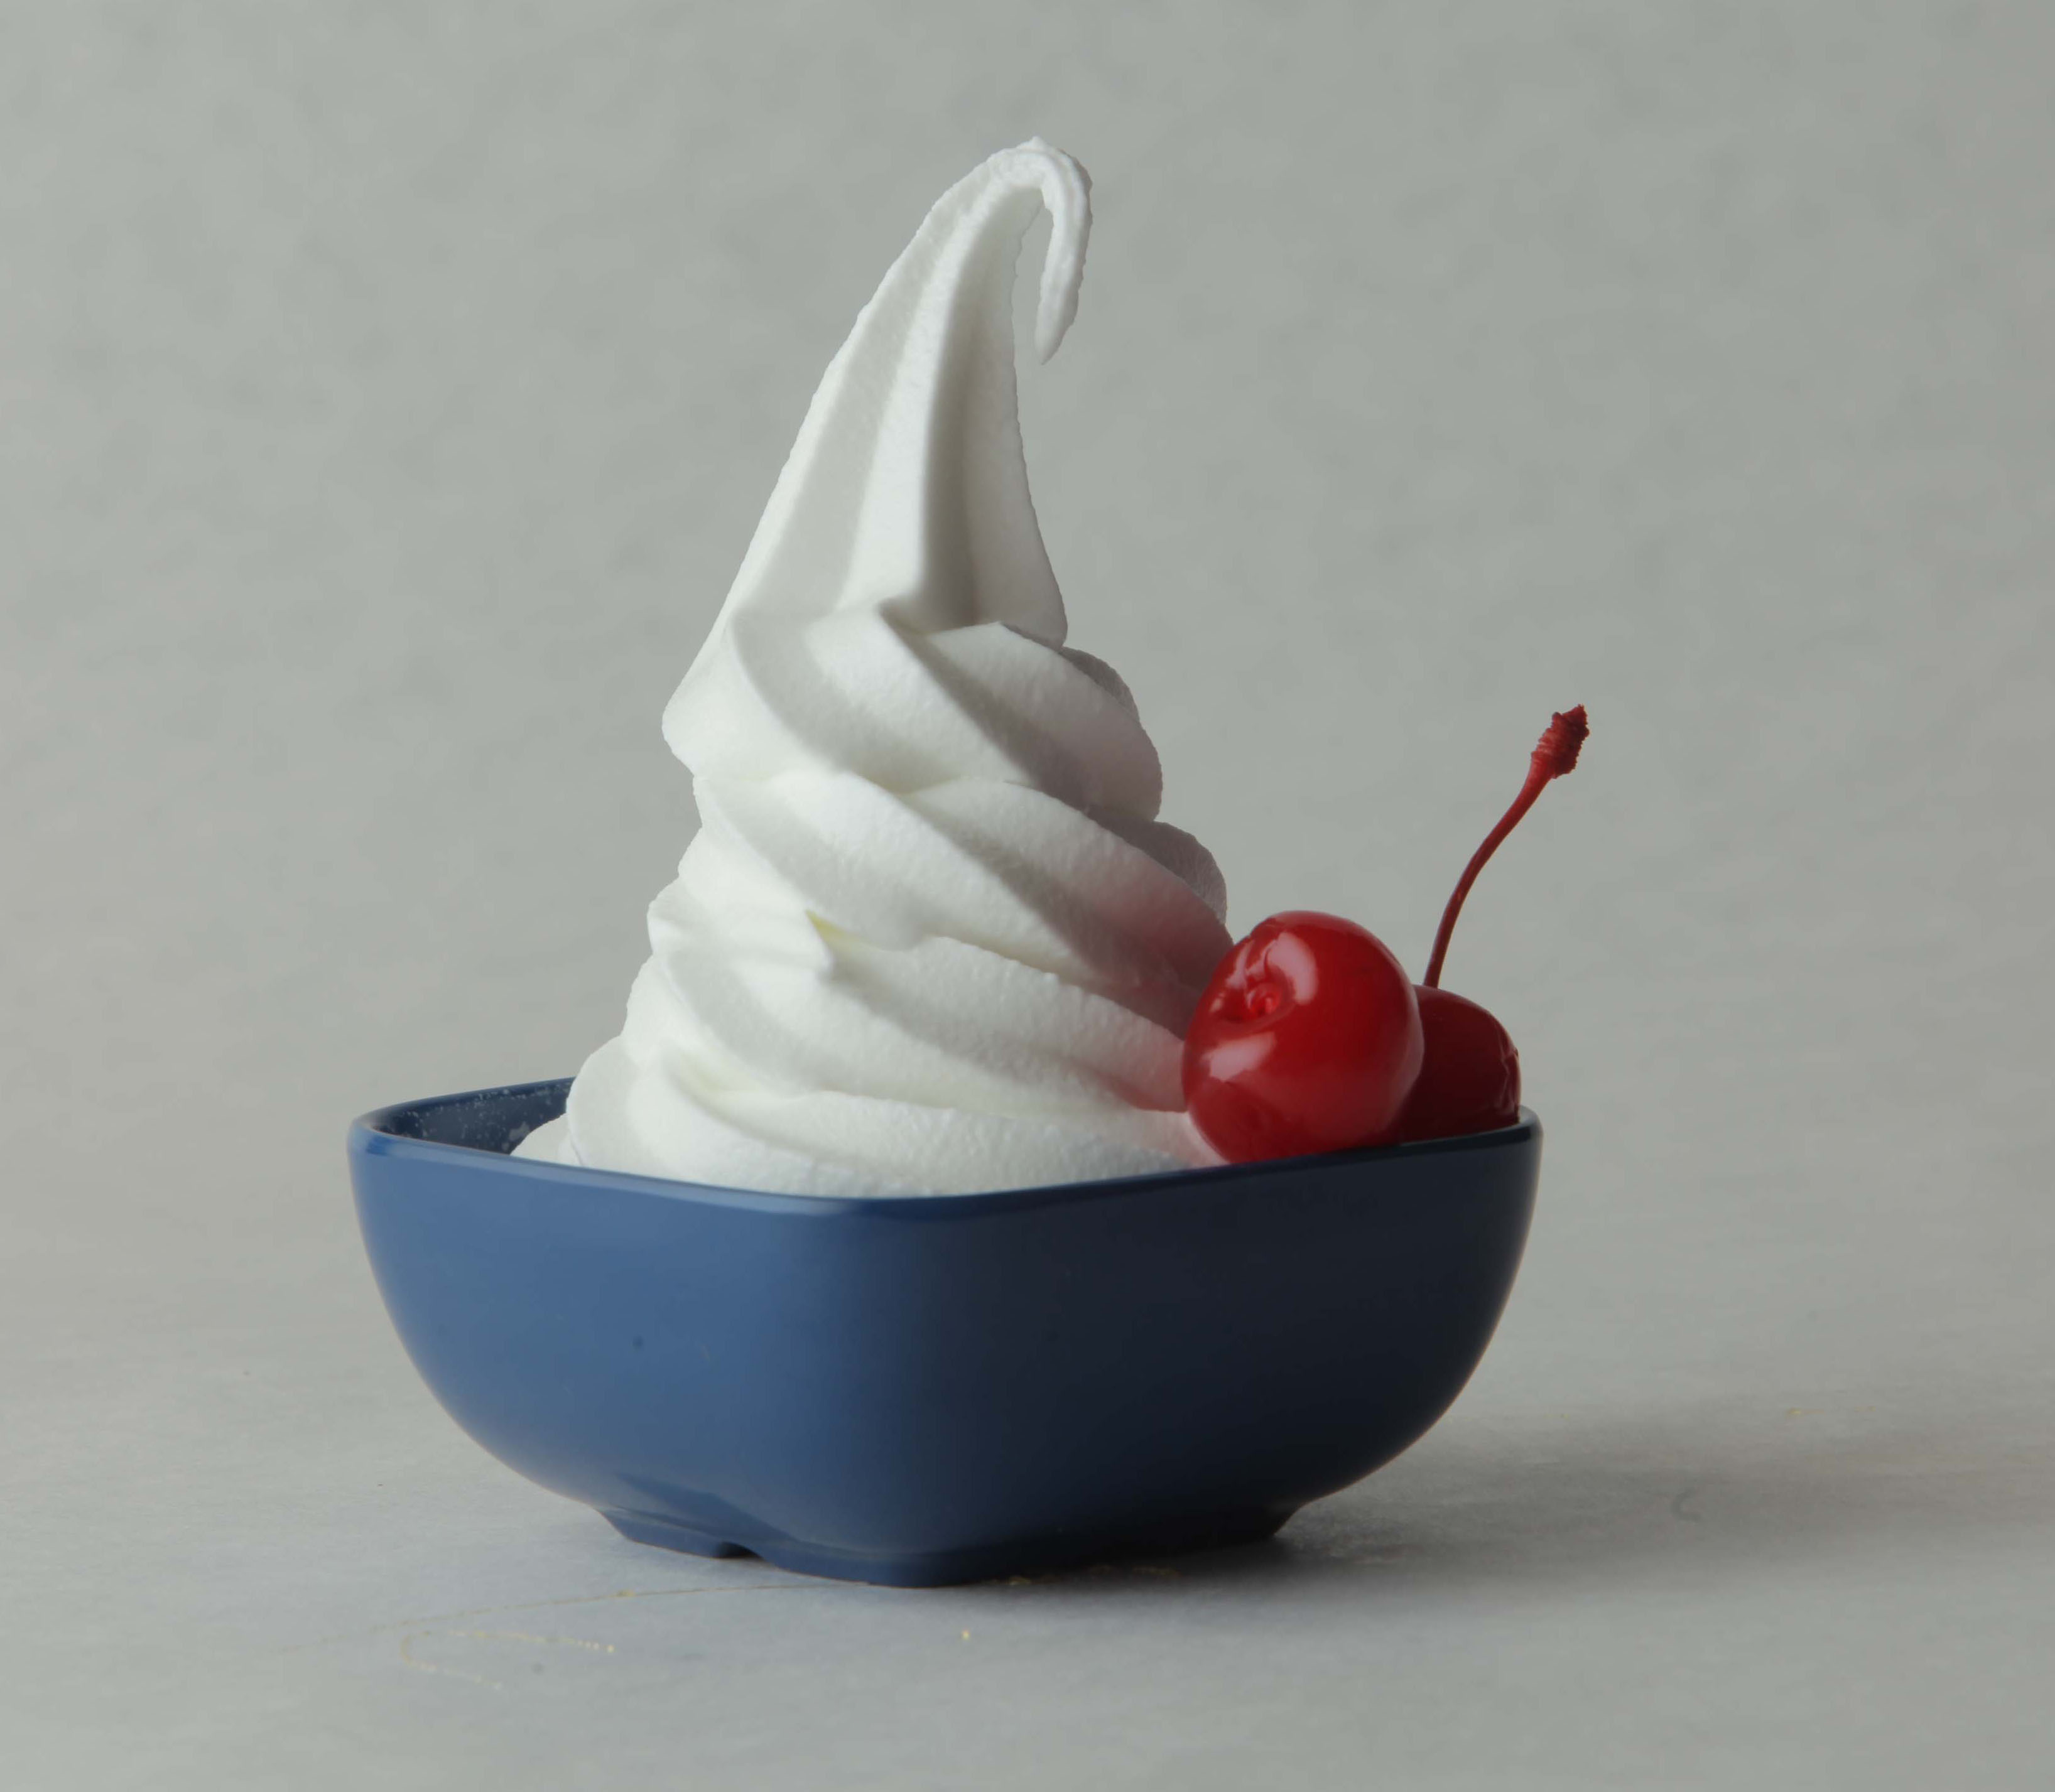 https://internationalfrozenyogurt.com/wp-content/uploads/2013/12/YogurtWEB2cropped1.jpg